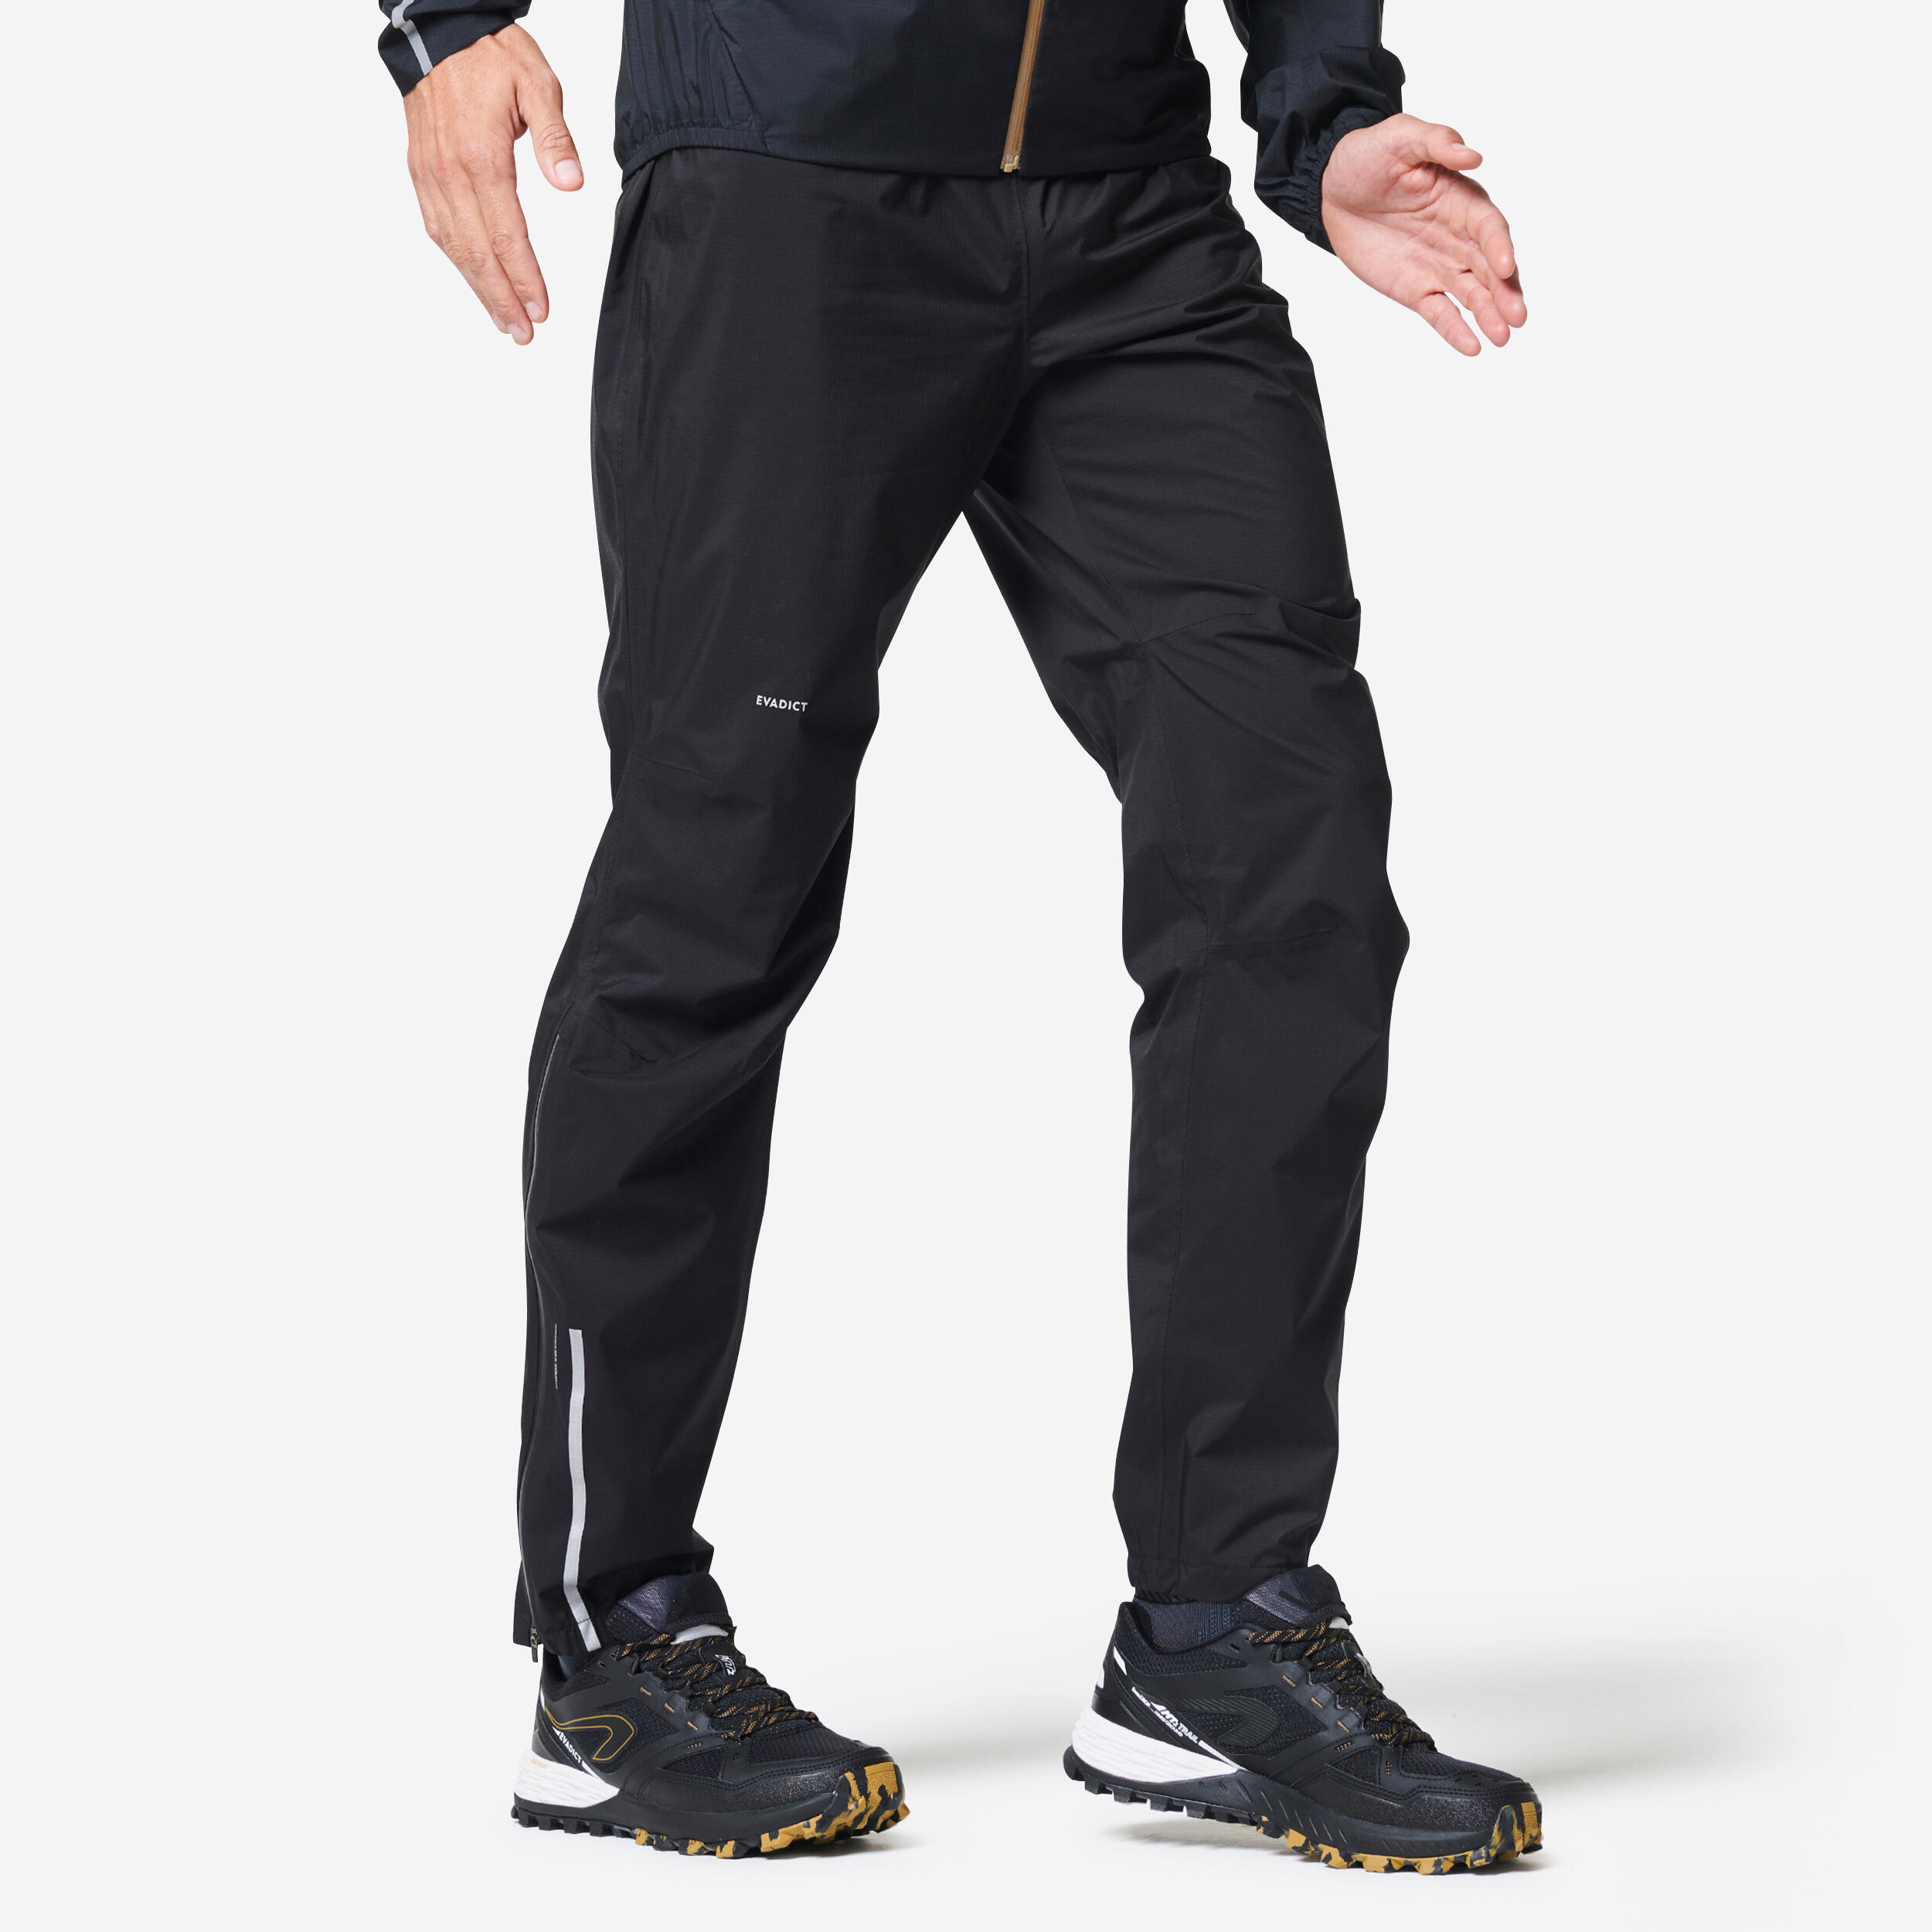 men s trail running waterproof rain trousers black